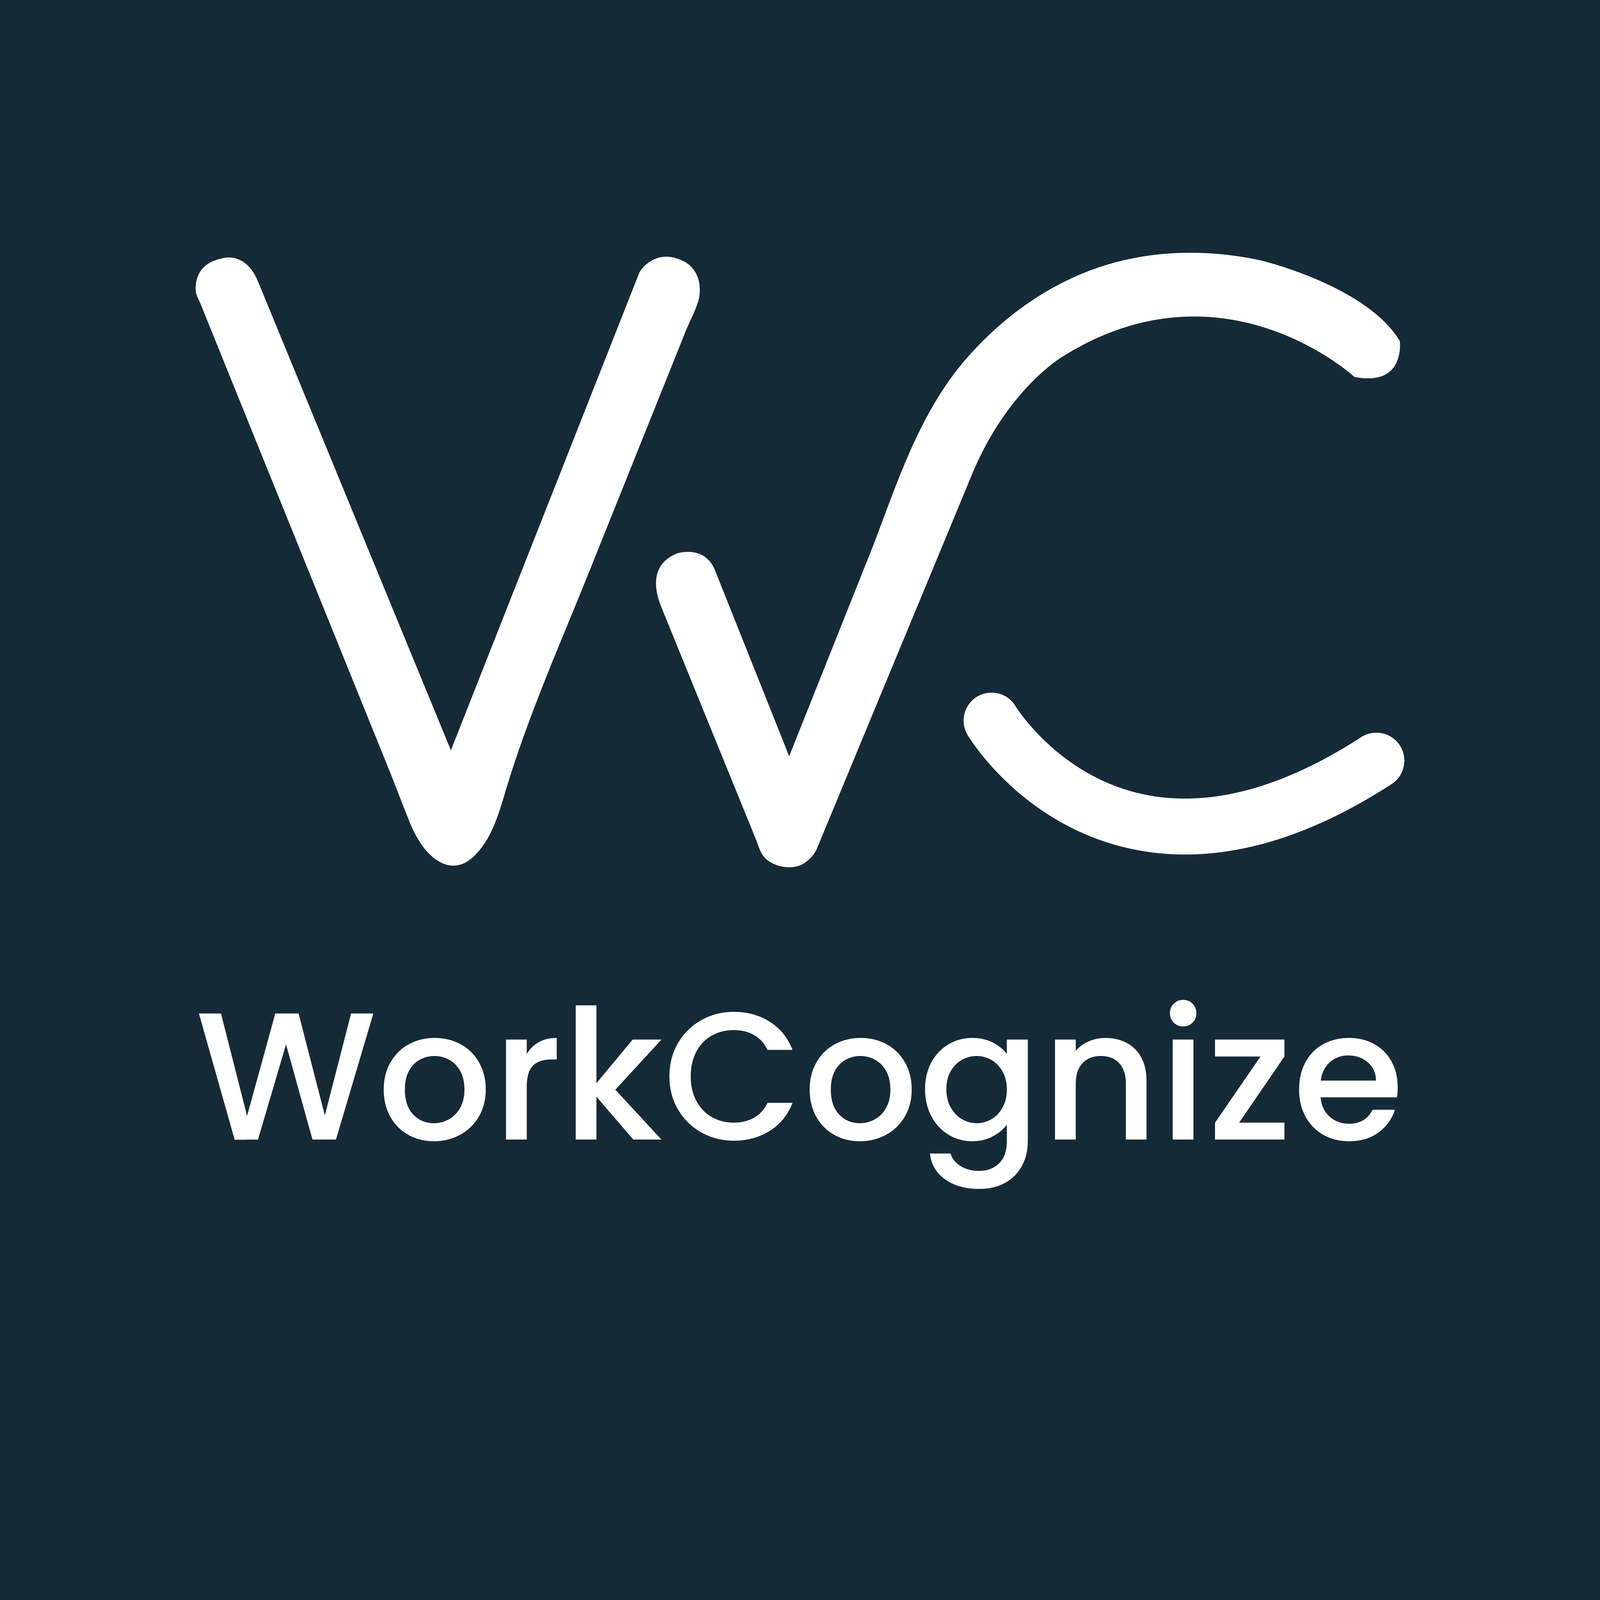 Workcognize